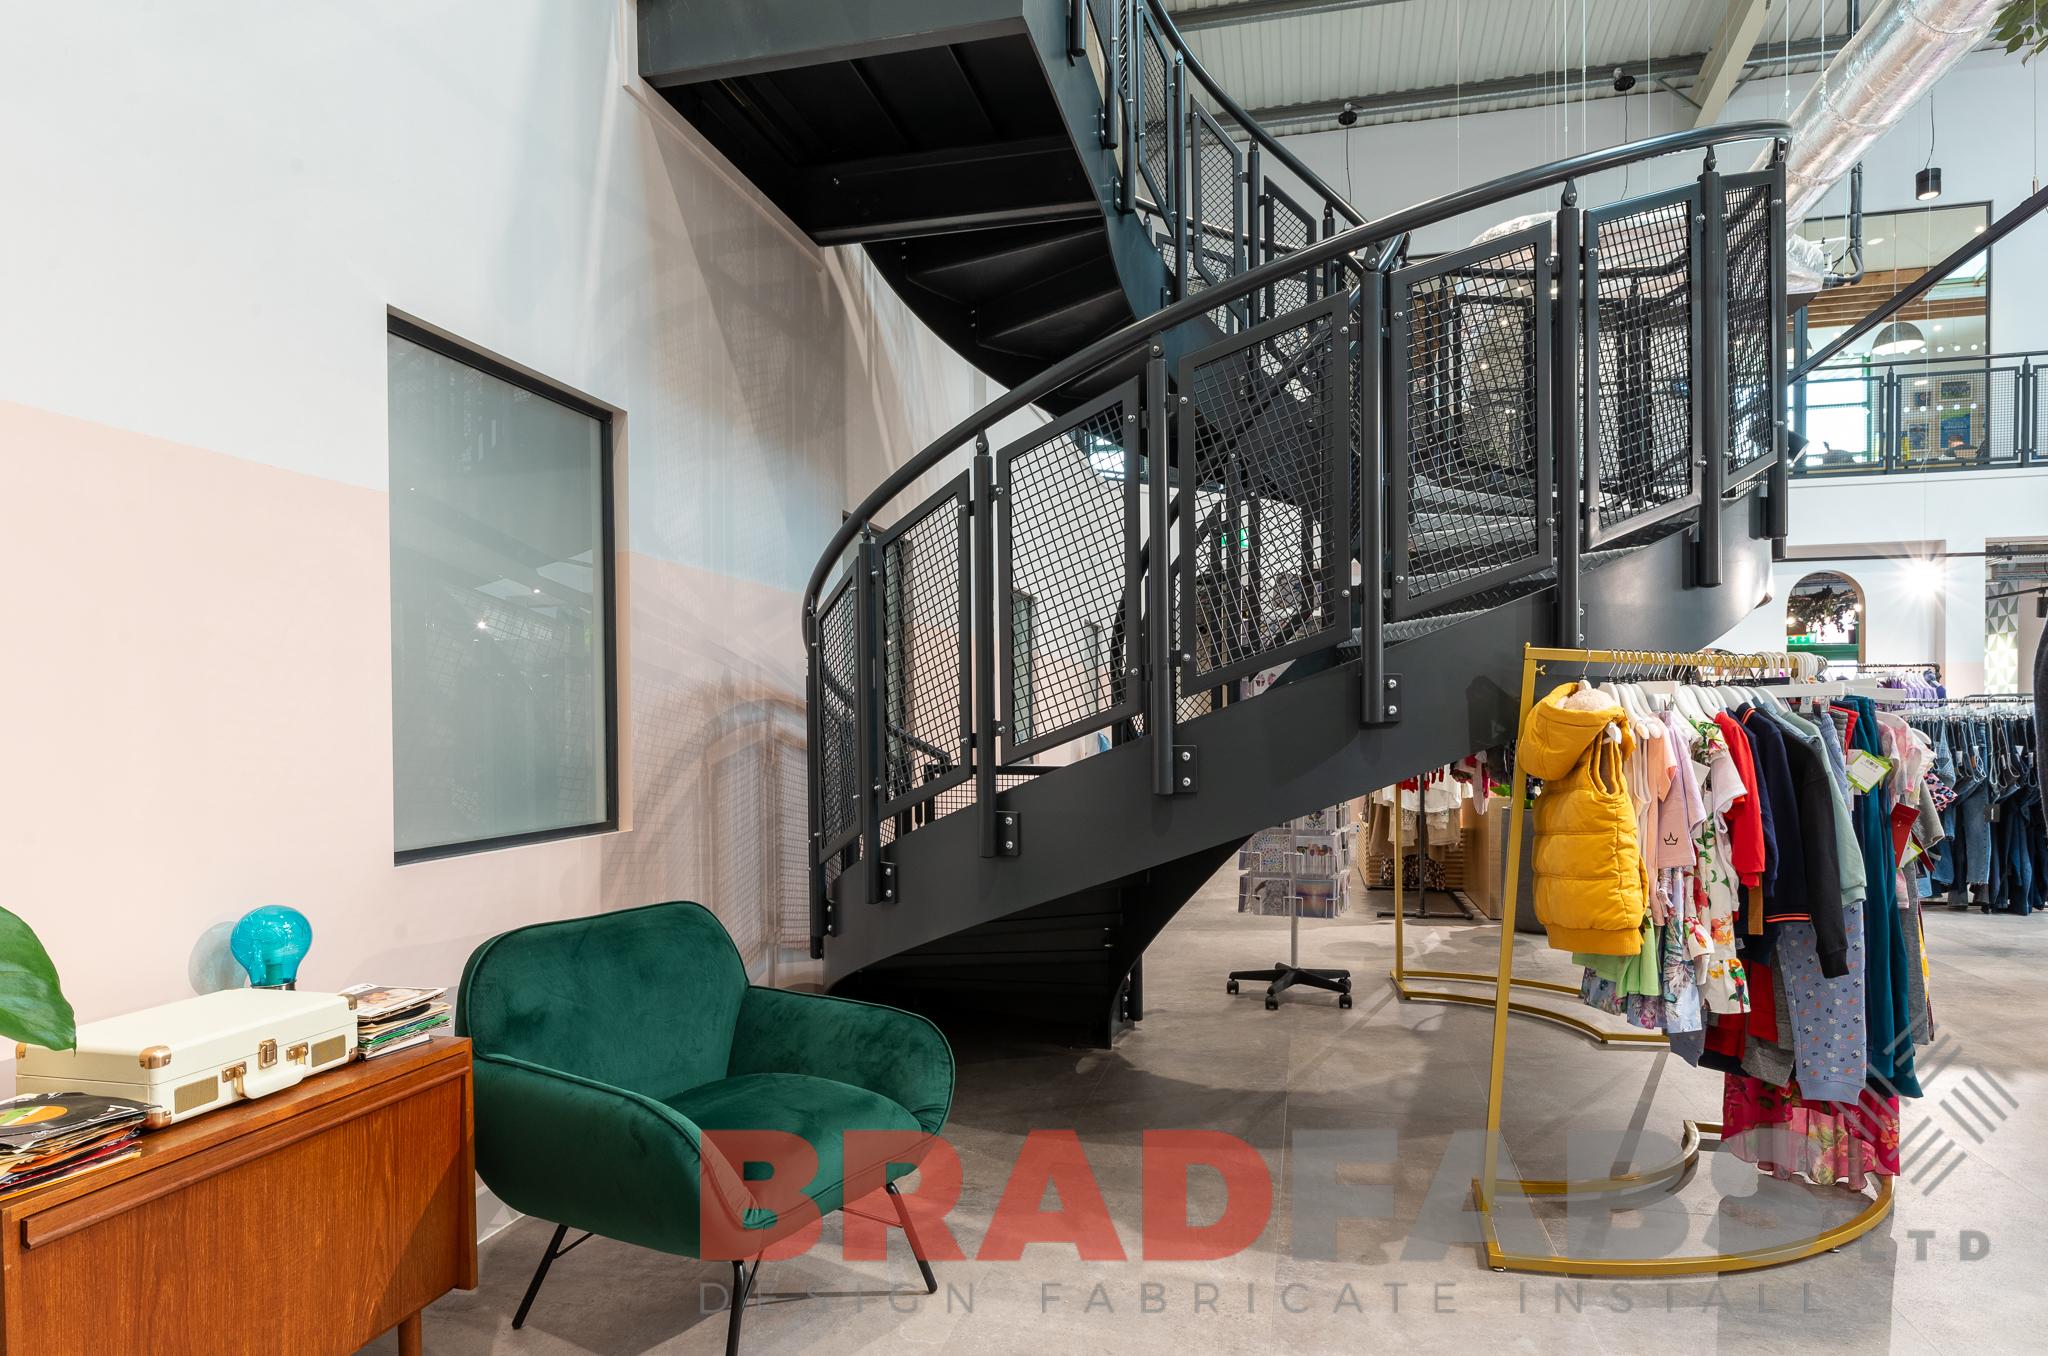 Bradfabs, helix staircase, internal staircase, durbar treads 